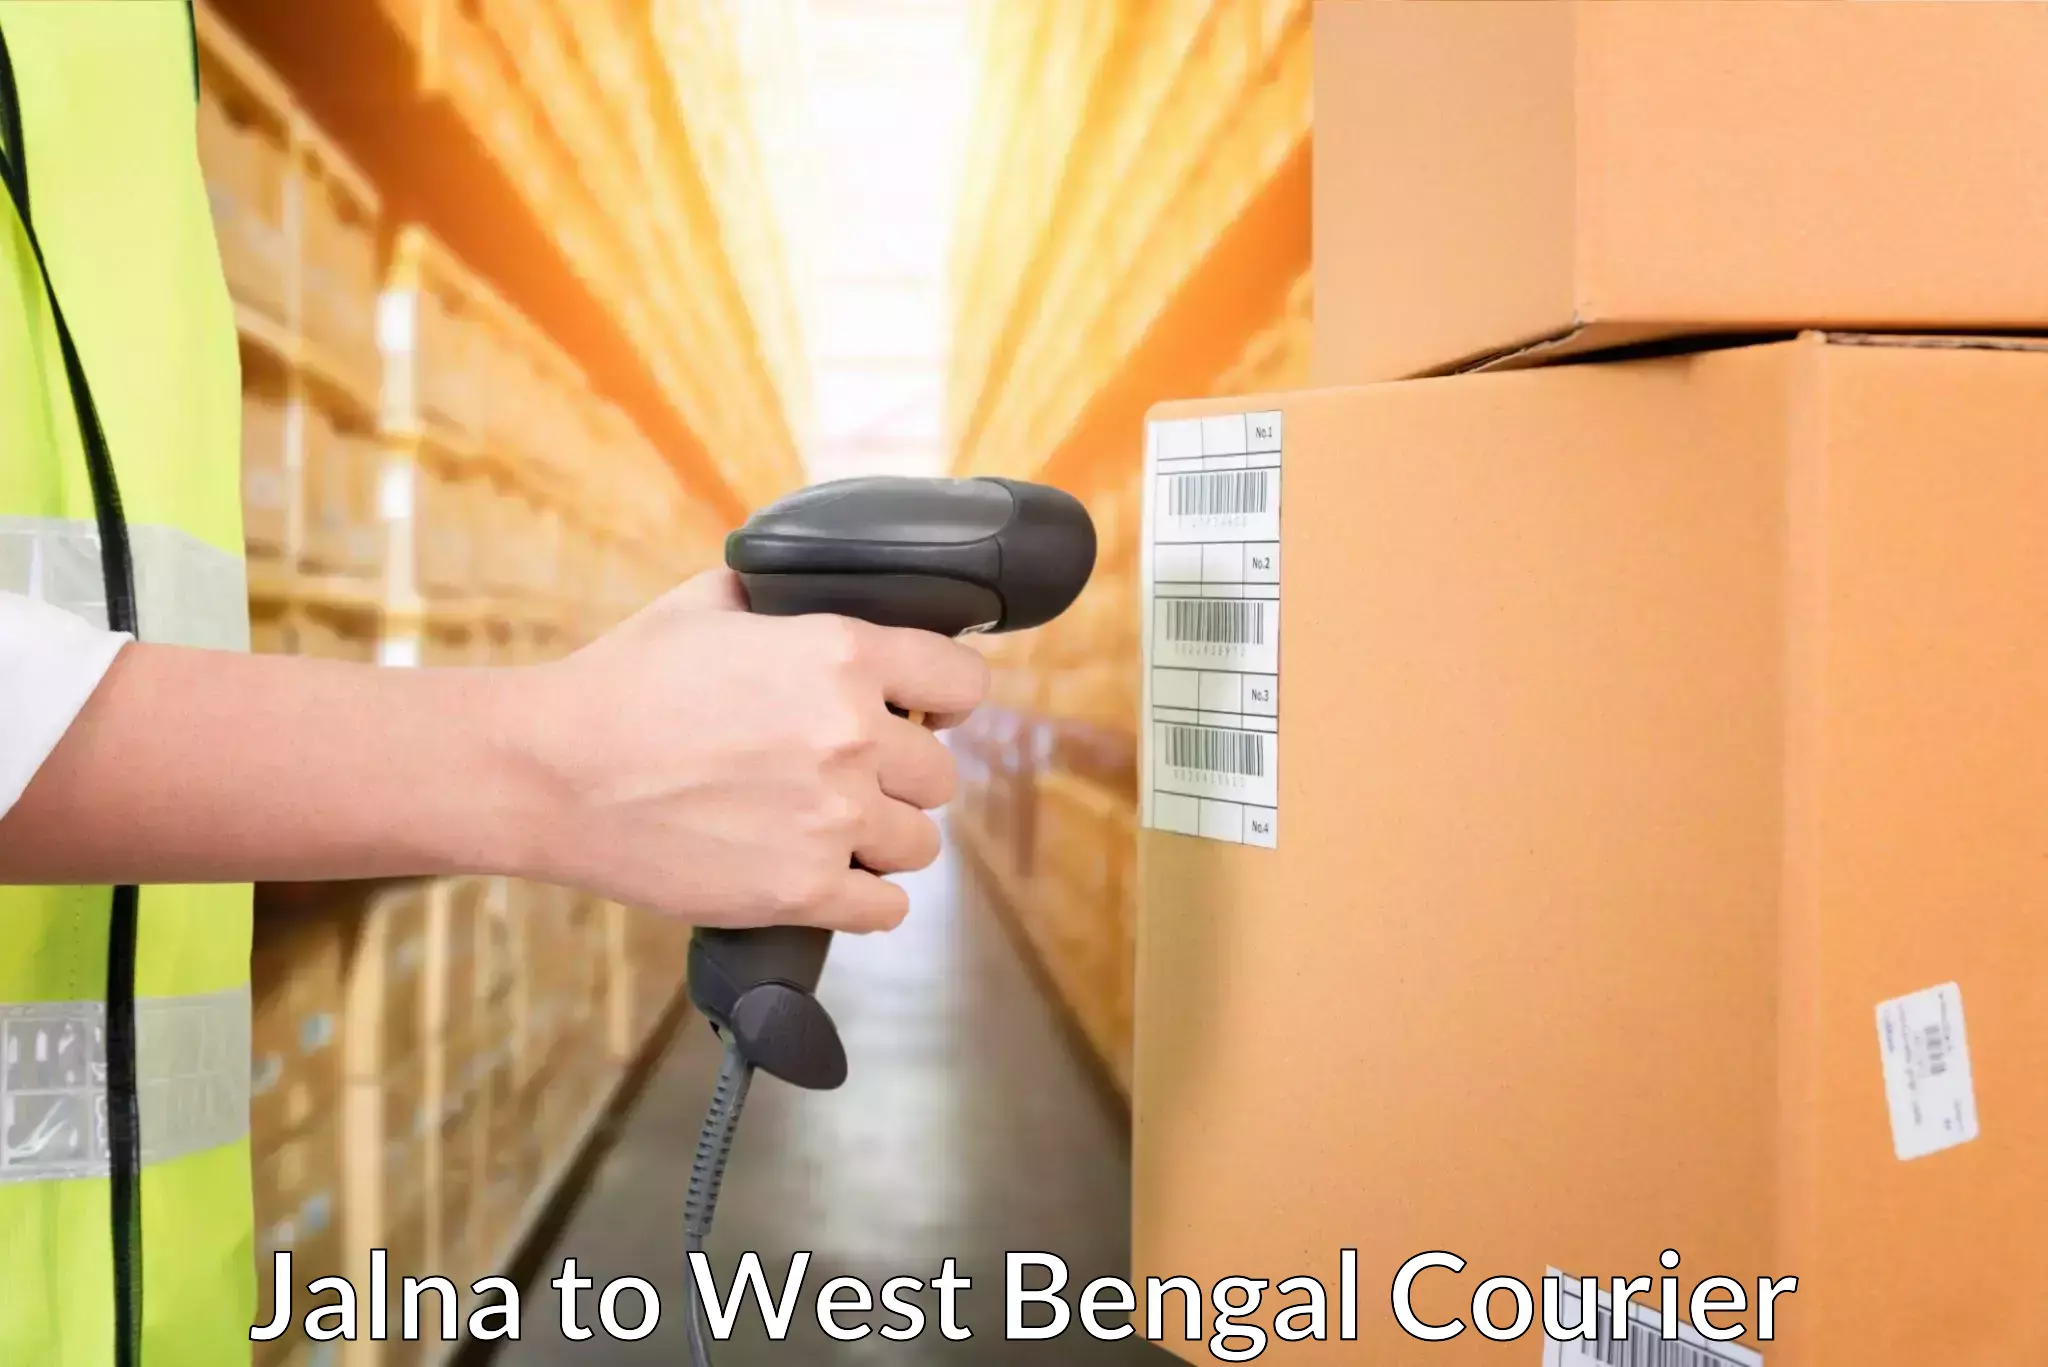 Courier service partnerships Jalna to Kolkata Port